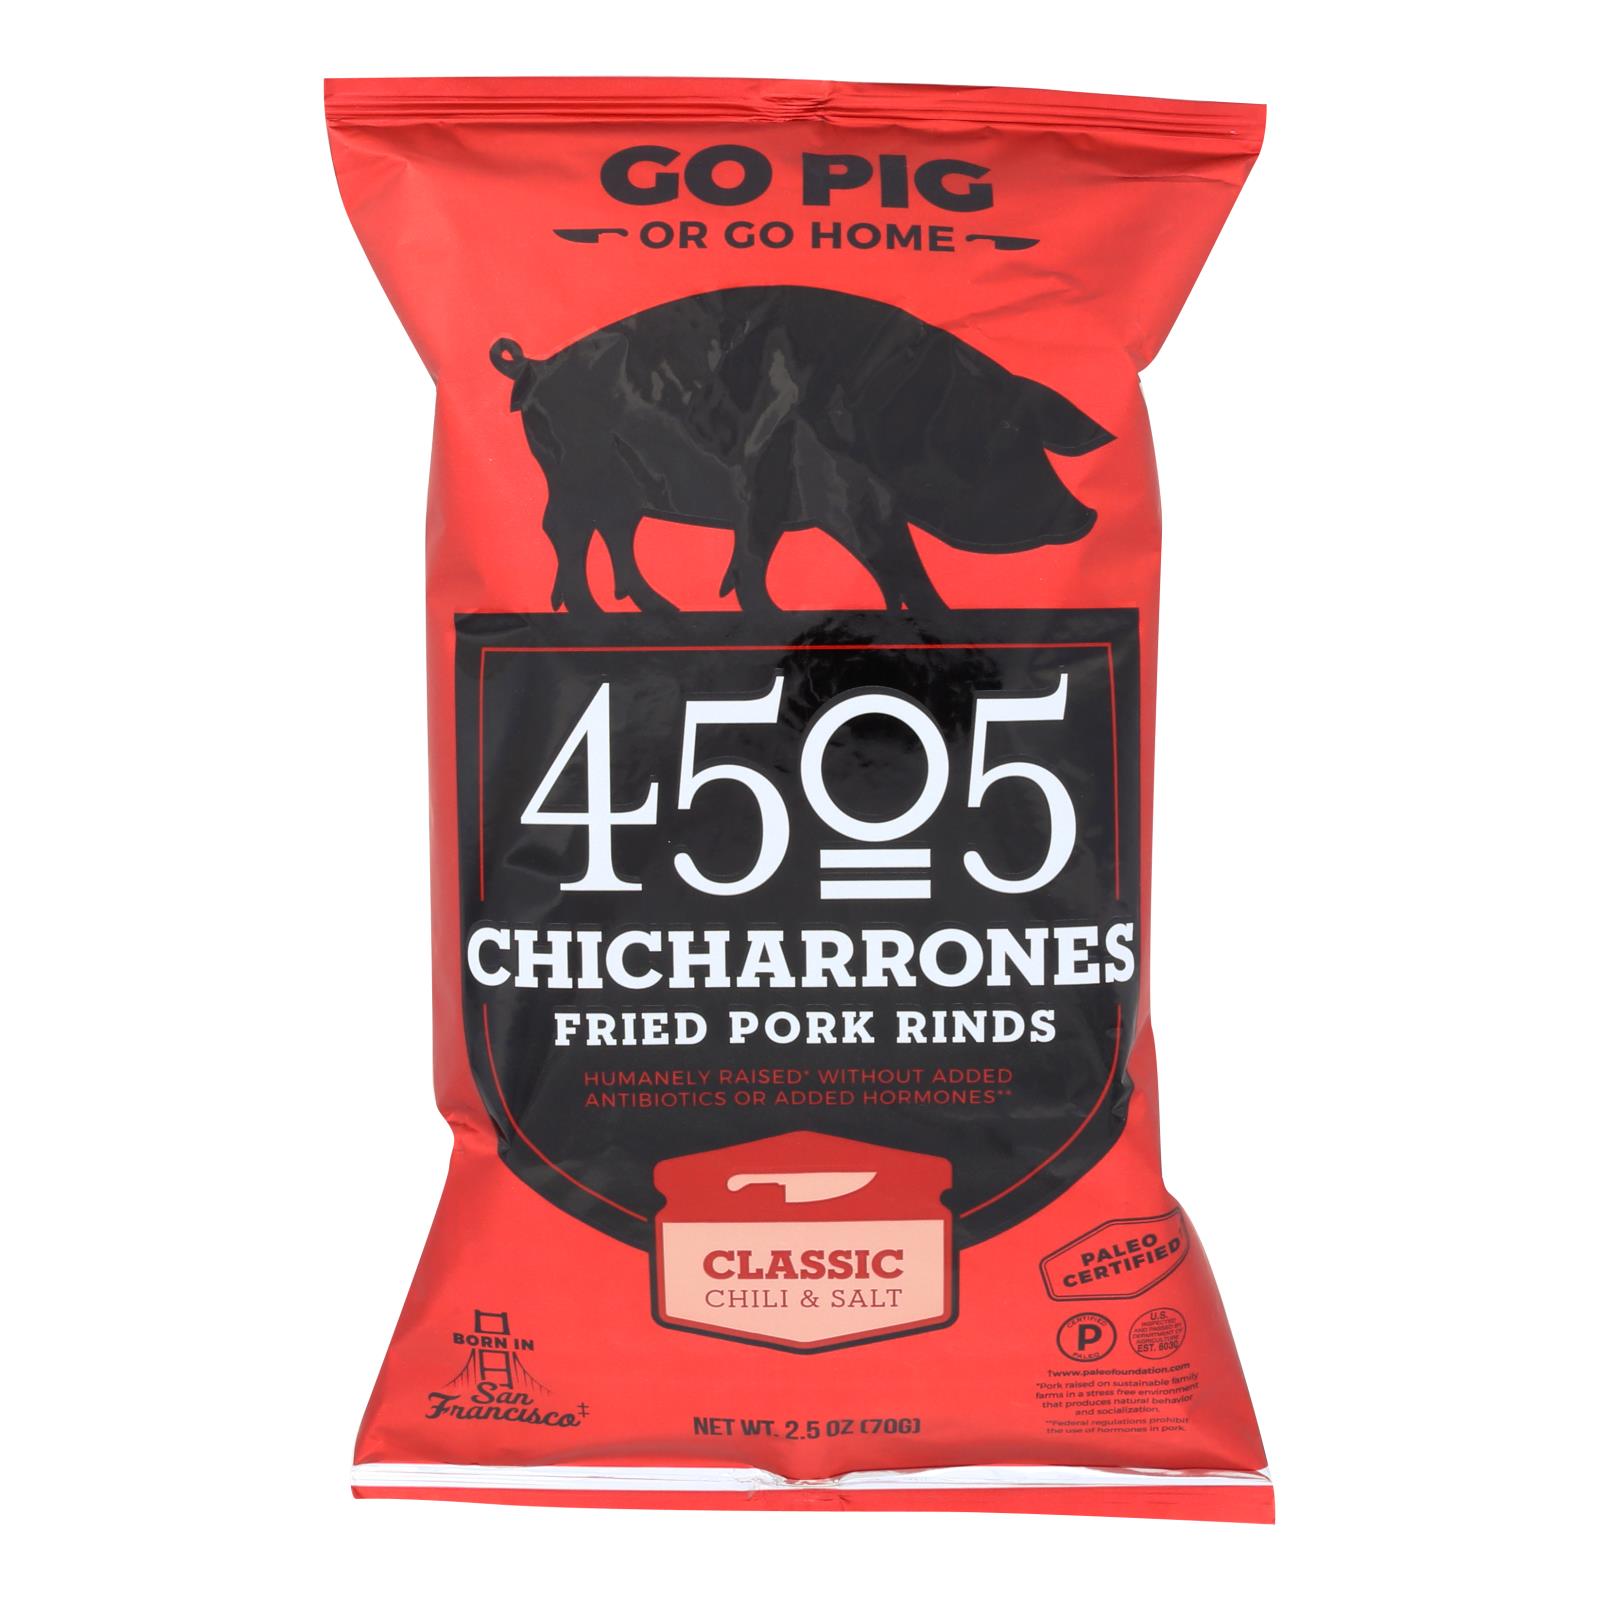 4505 - Pork Rinds - Chicharones - Chili - Salt - 12개 묶음상품 - 2.5 oz